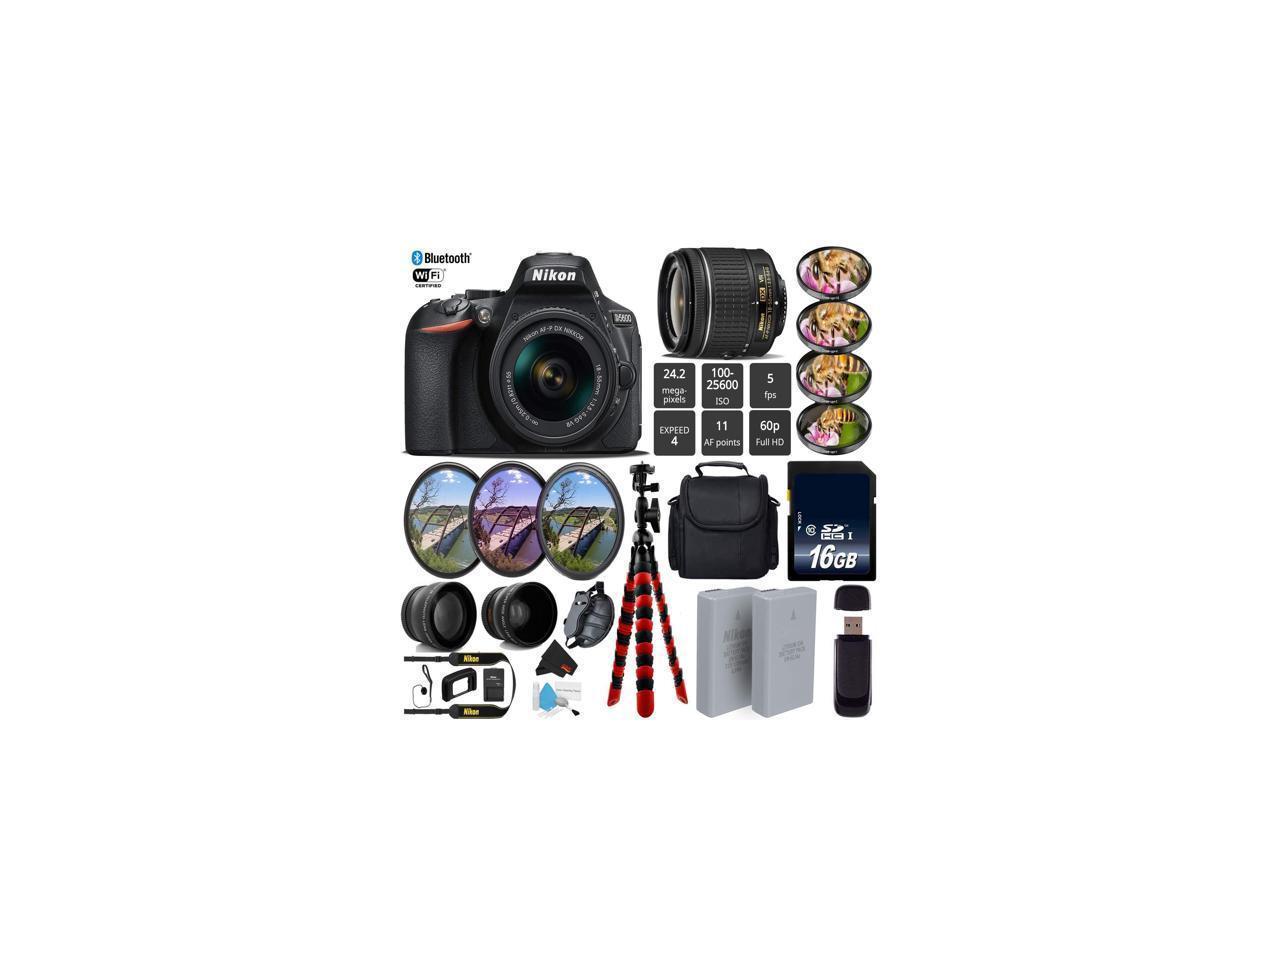 Nikon D5600 DSLR Wi-FI NFC 24.2MP DX CMOS Camera AF-P 18-55mm VR Lens + LED Light kit + Wide Angle & Telephoto Lens + 7PC Filter Kit + Camera Case - (Intl Model)